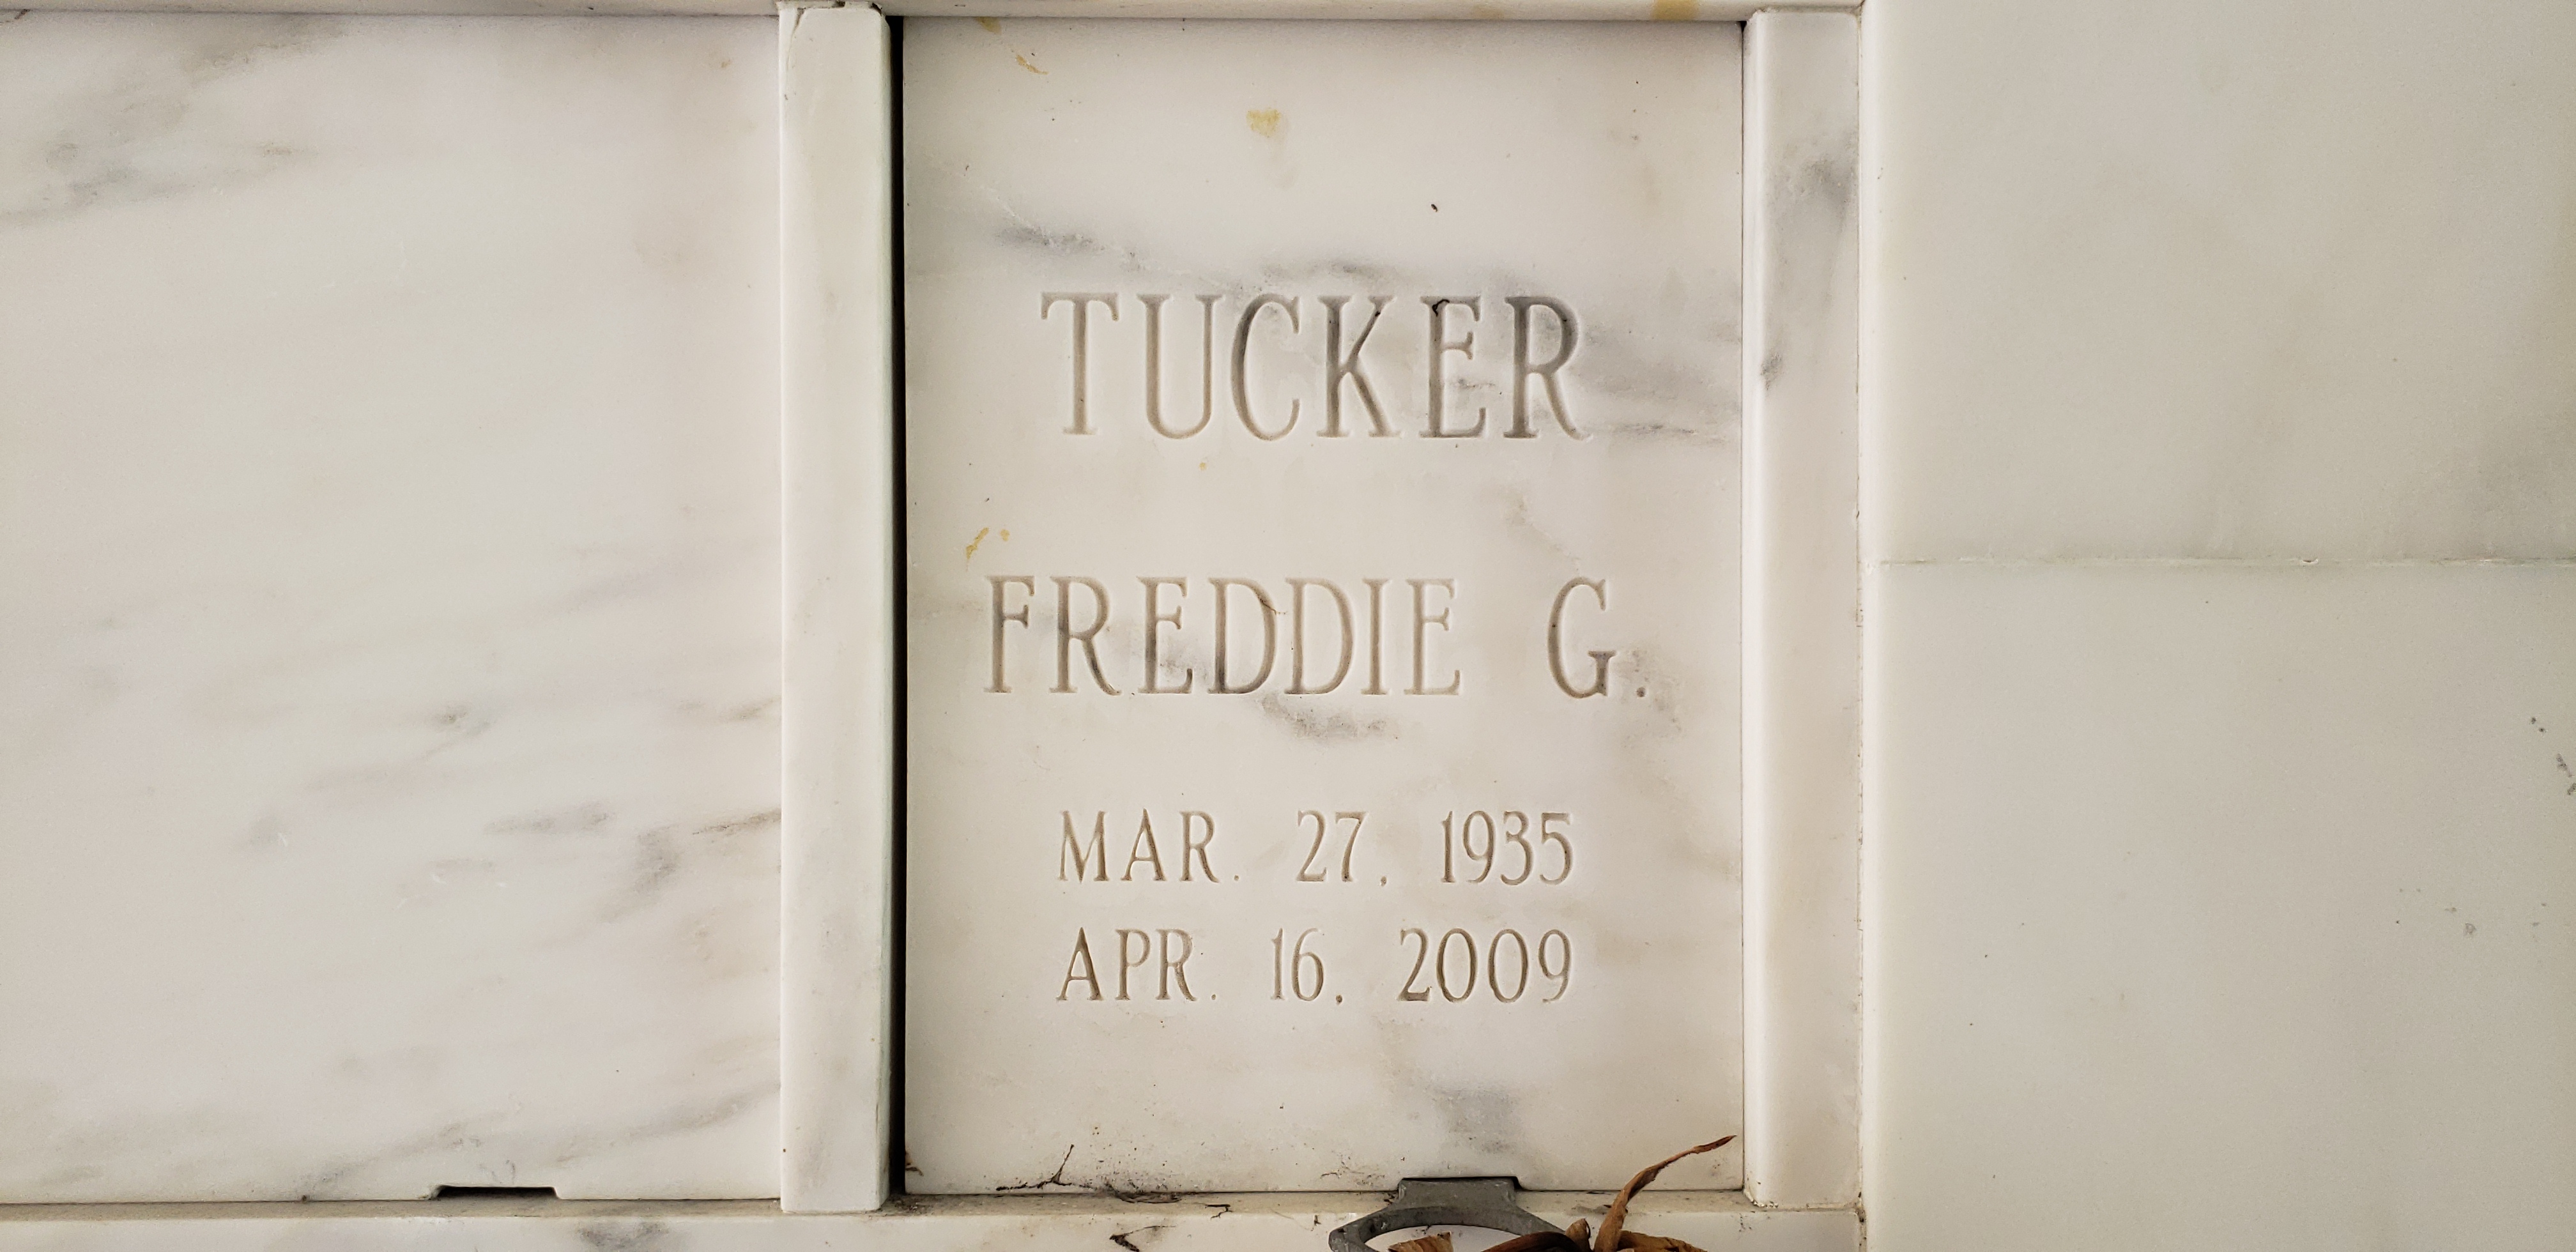 Freddie G Tucker